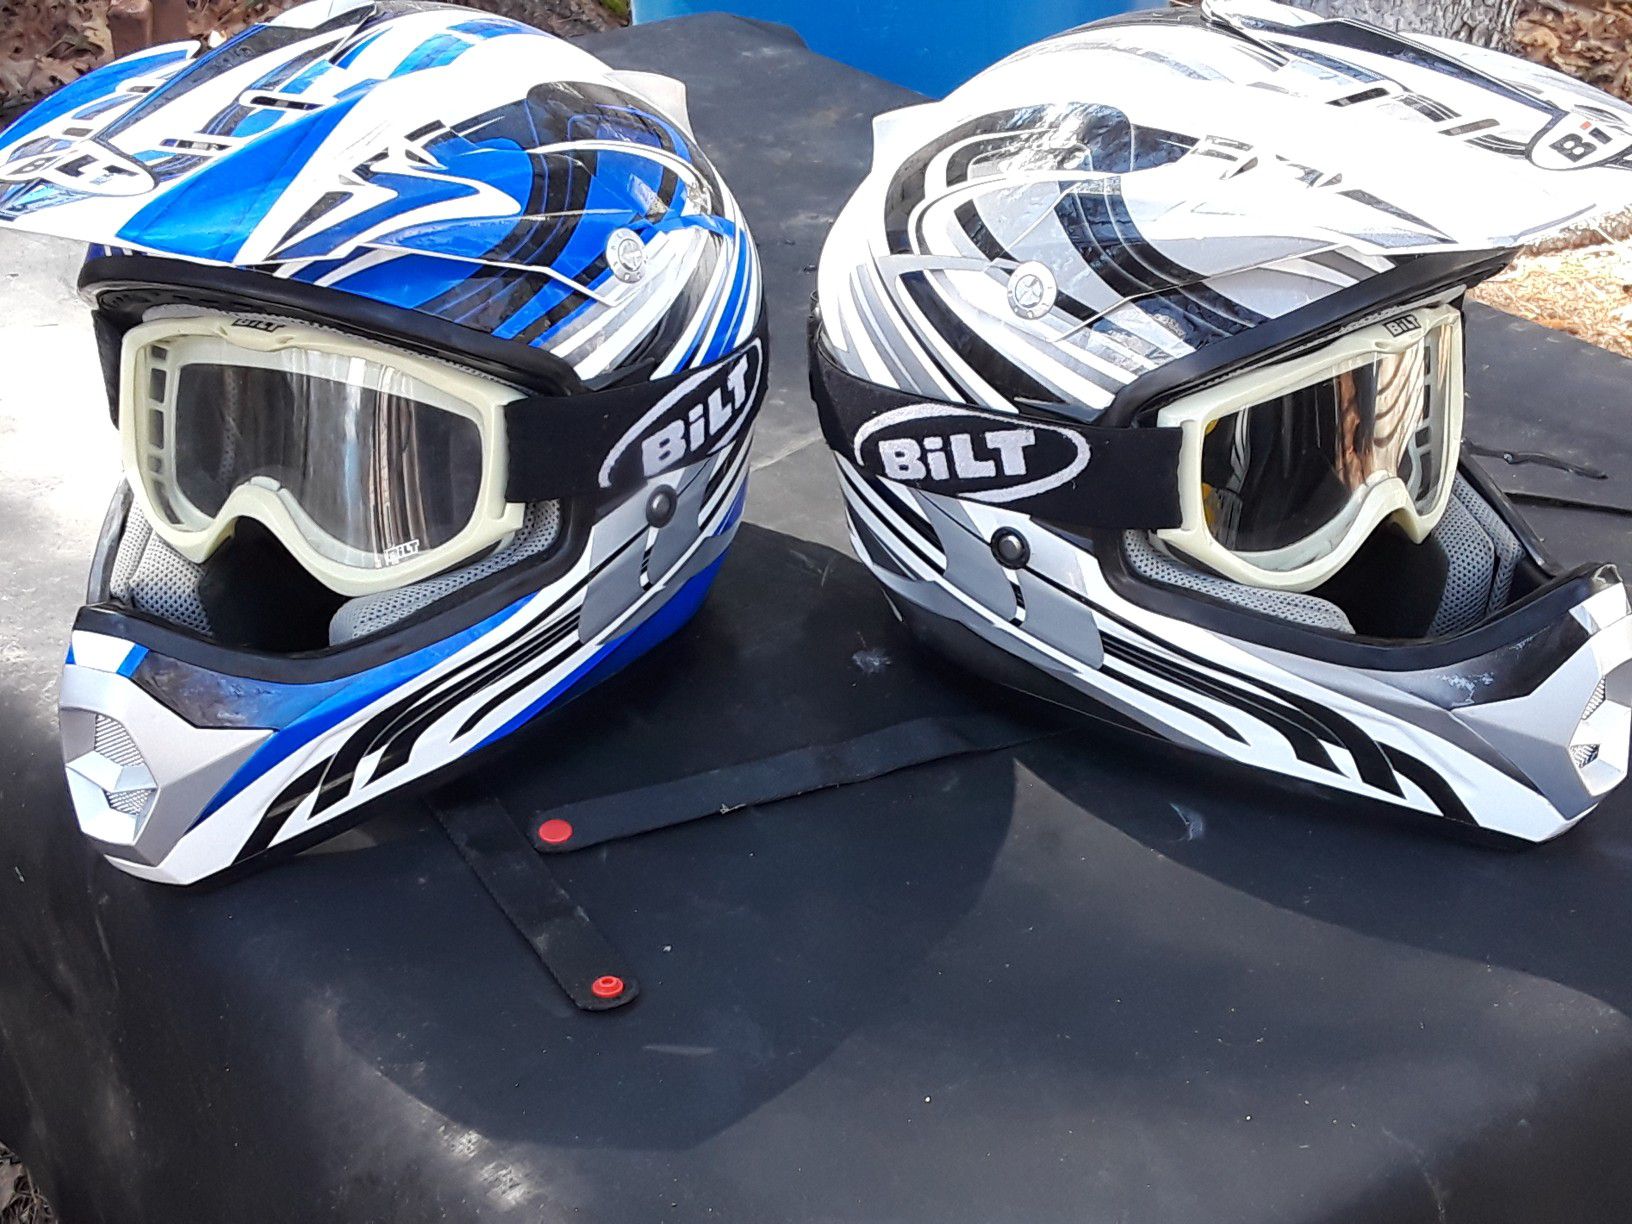 2 Bilt motorcycle helmets like new